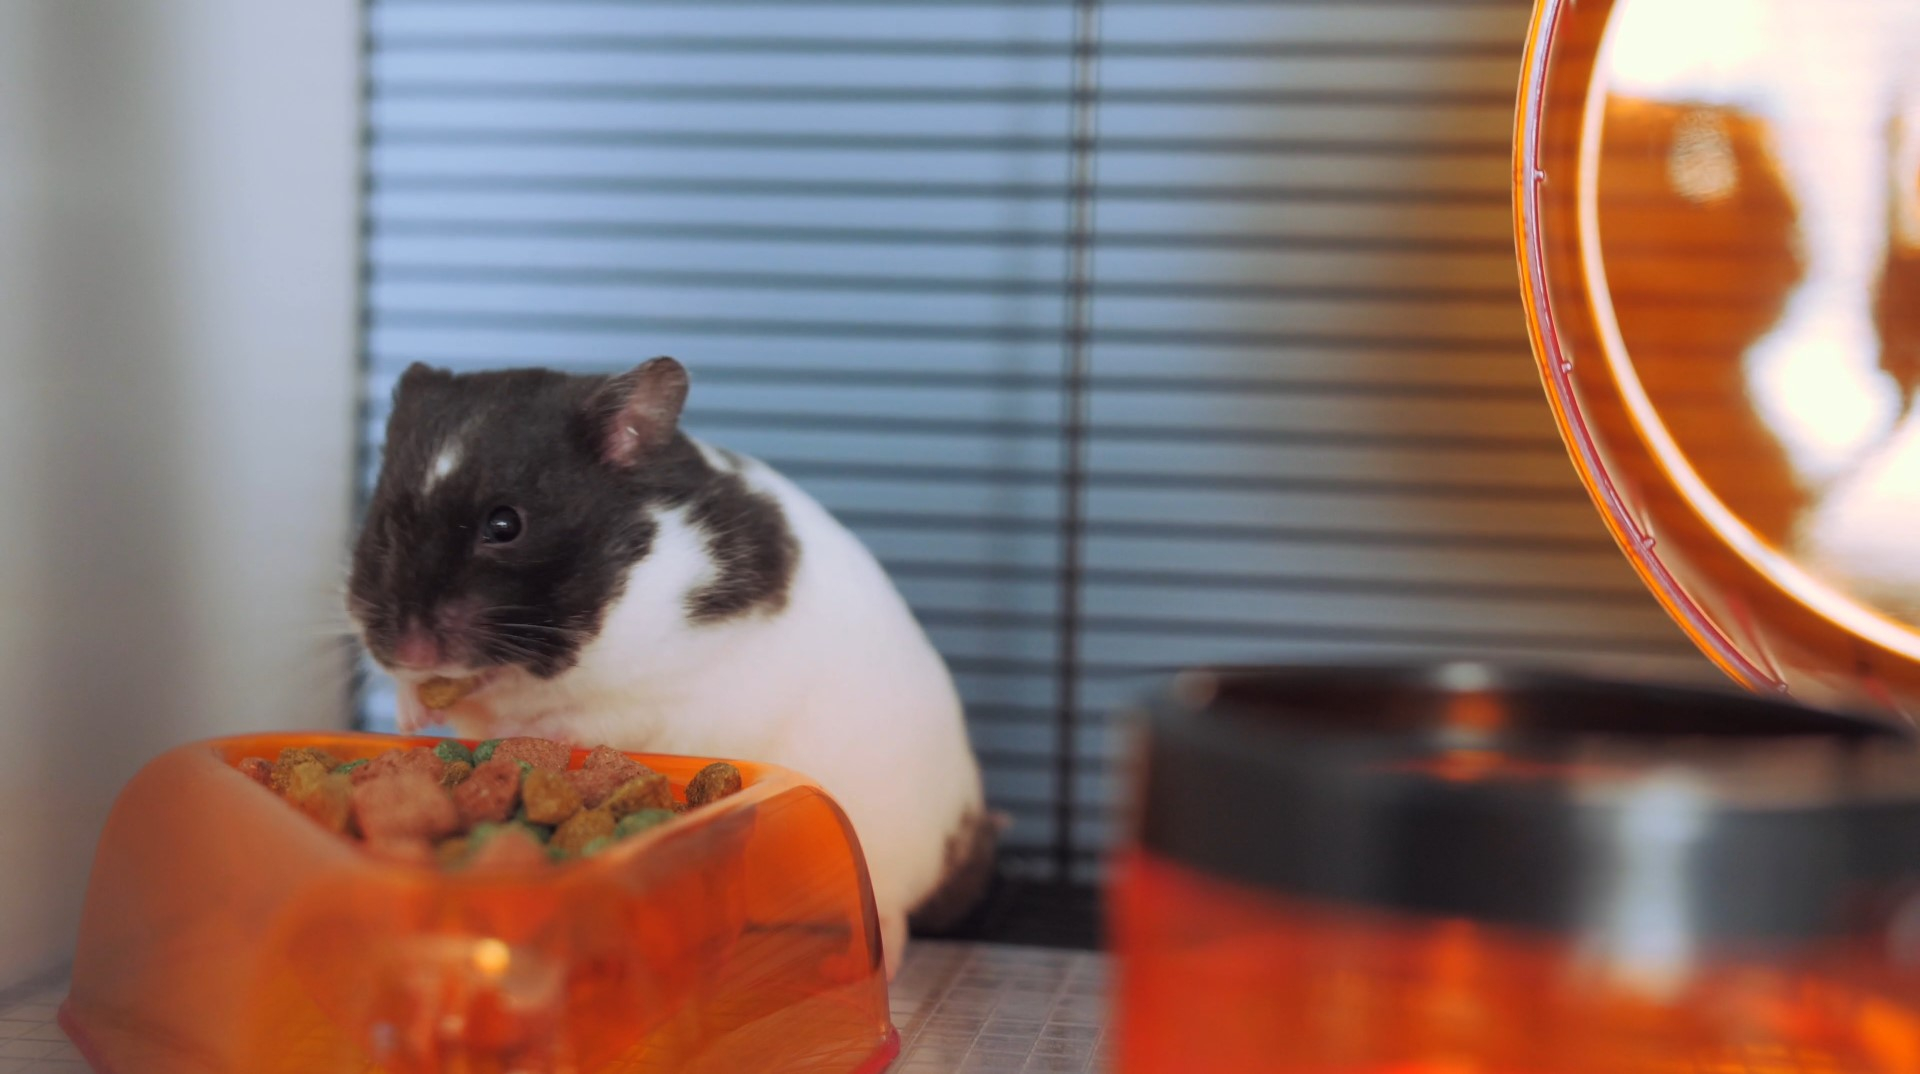 Hamster eating food inside their hamster cage.